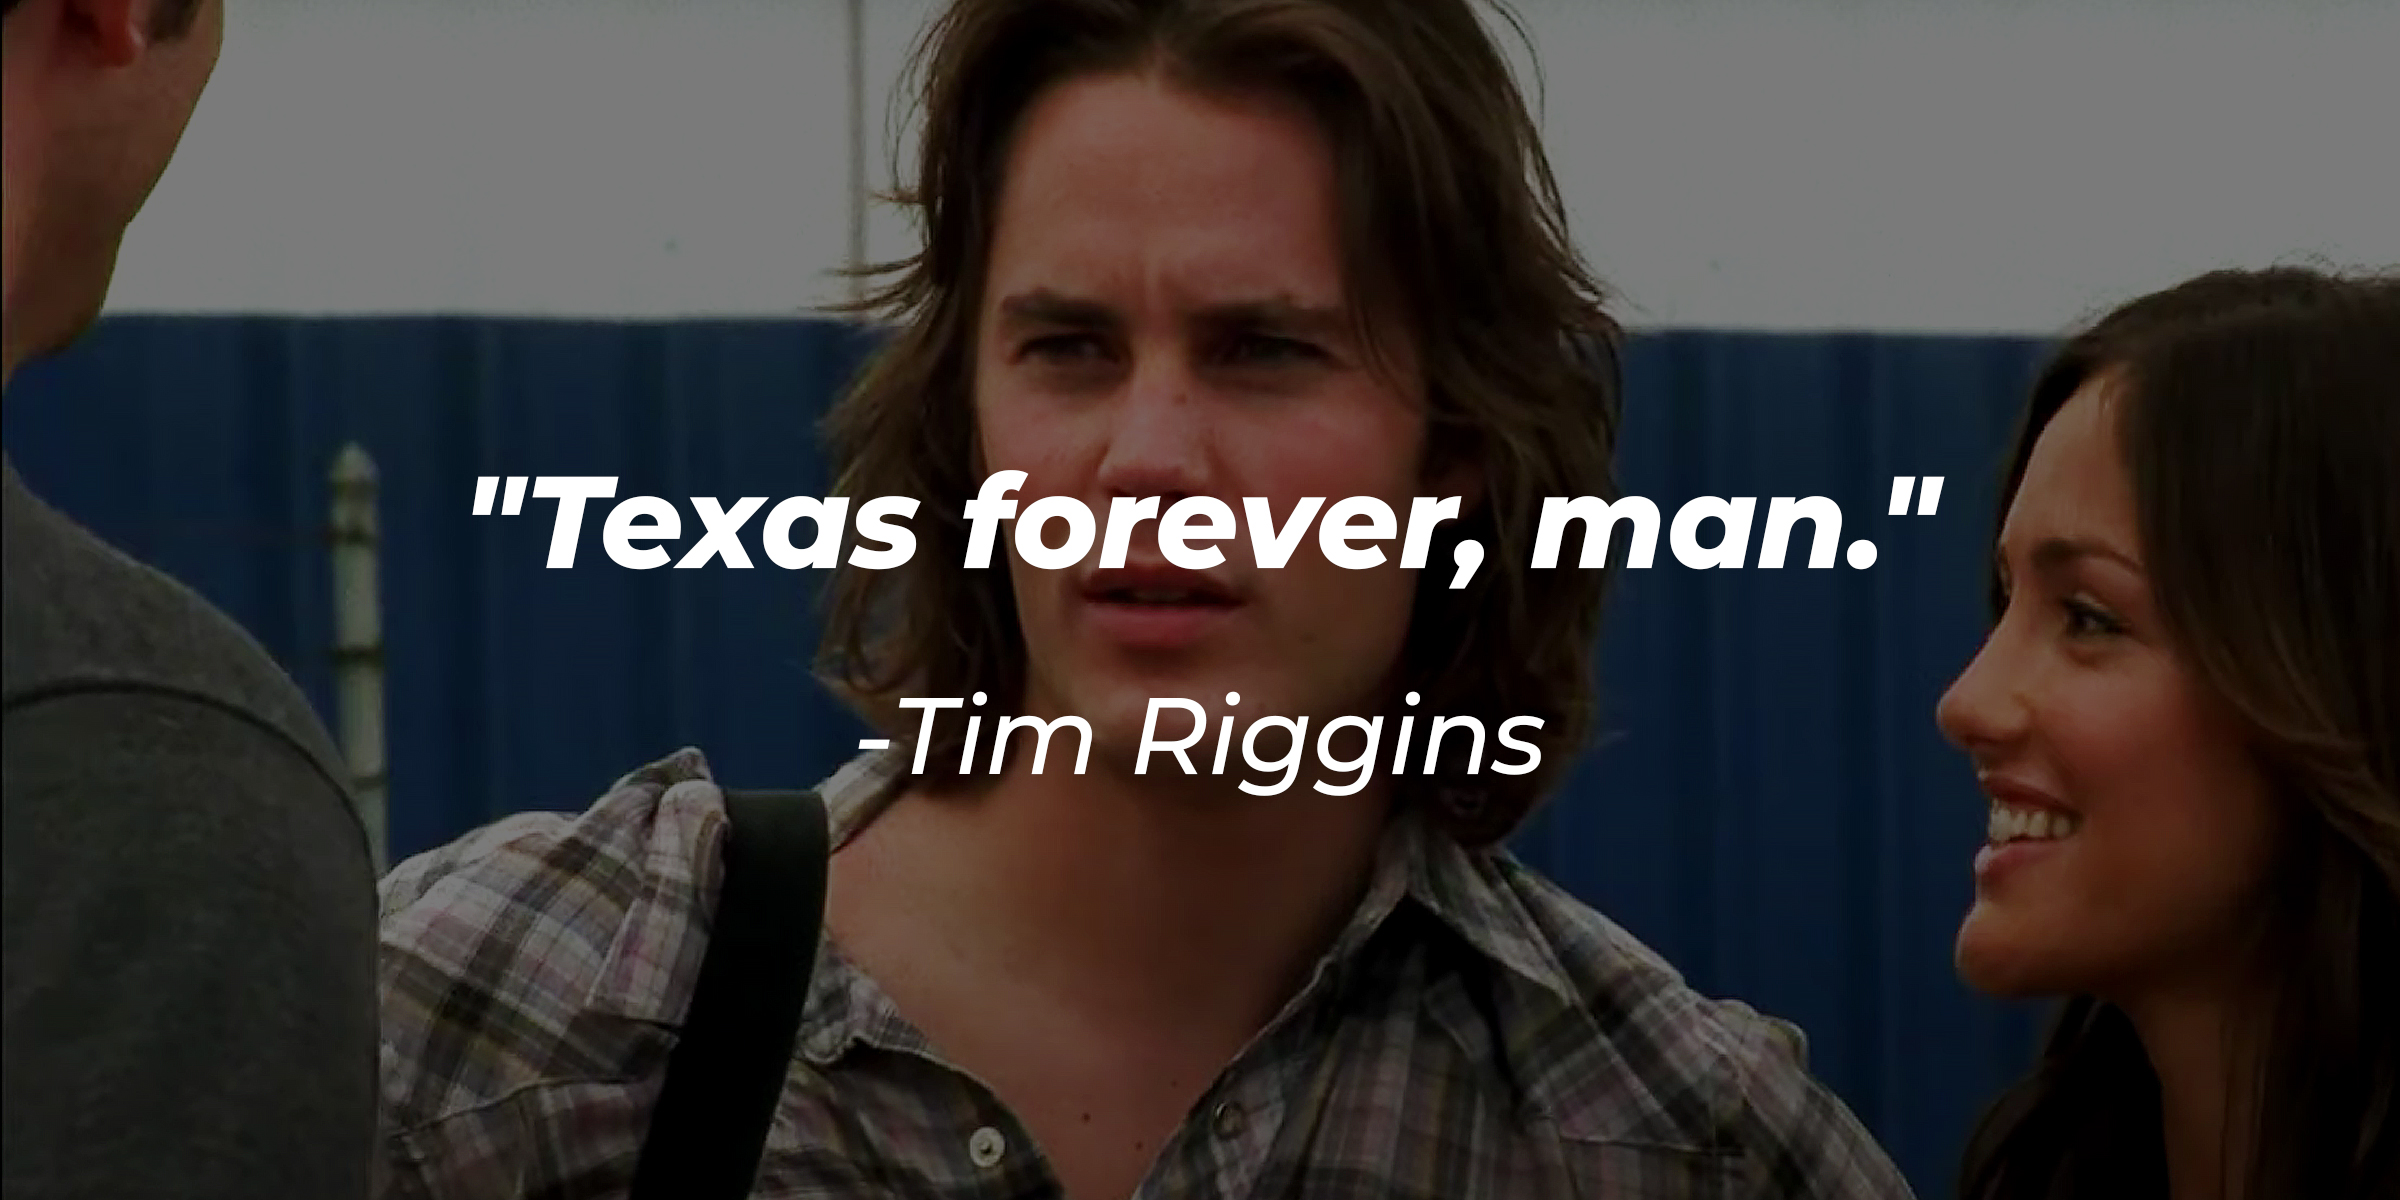 Tim Riggins' quote, "Texas forever, man." | Source: Facebook/fridaynightlights